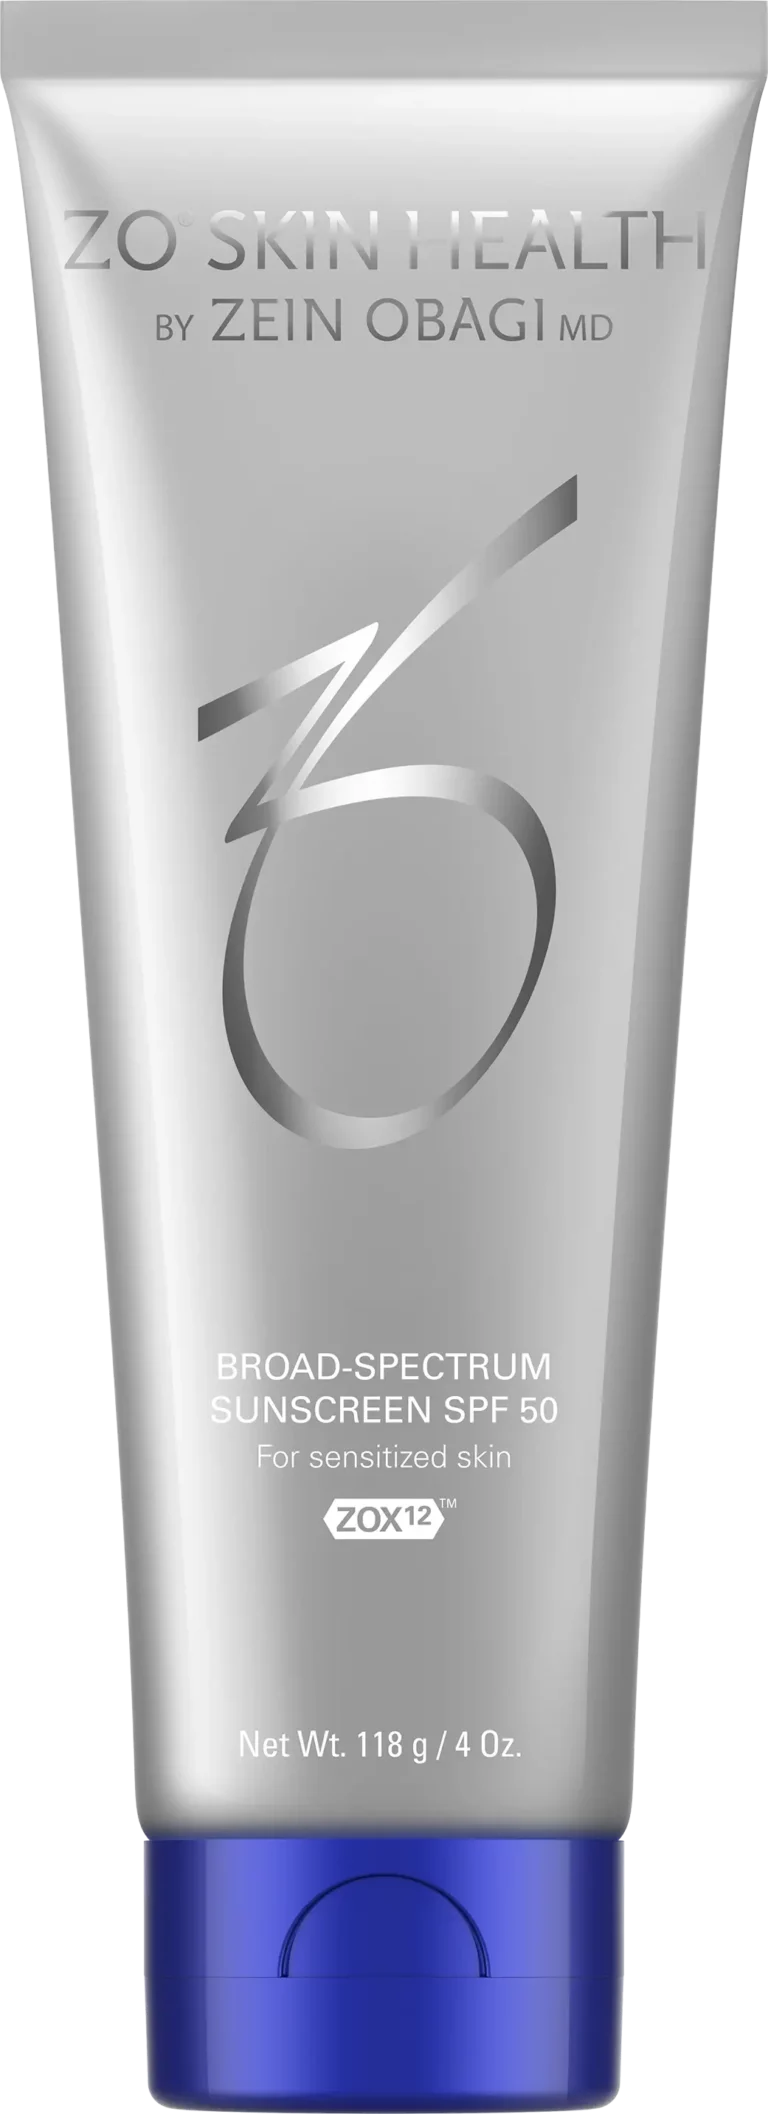 ZO Skin Health Broad-Spectrum